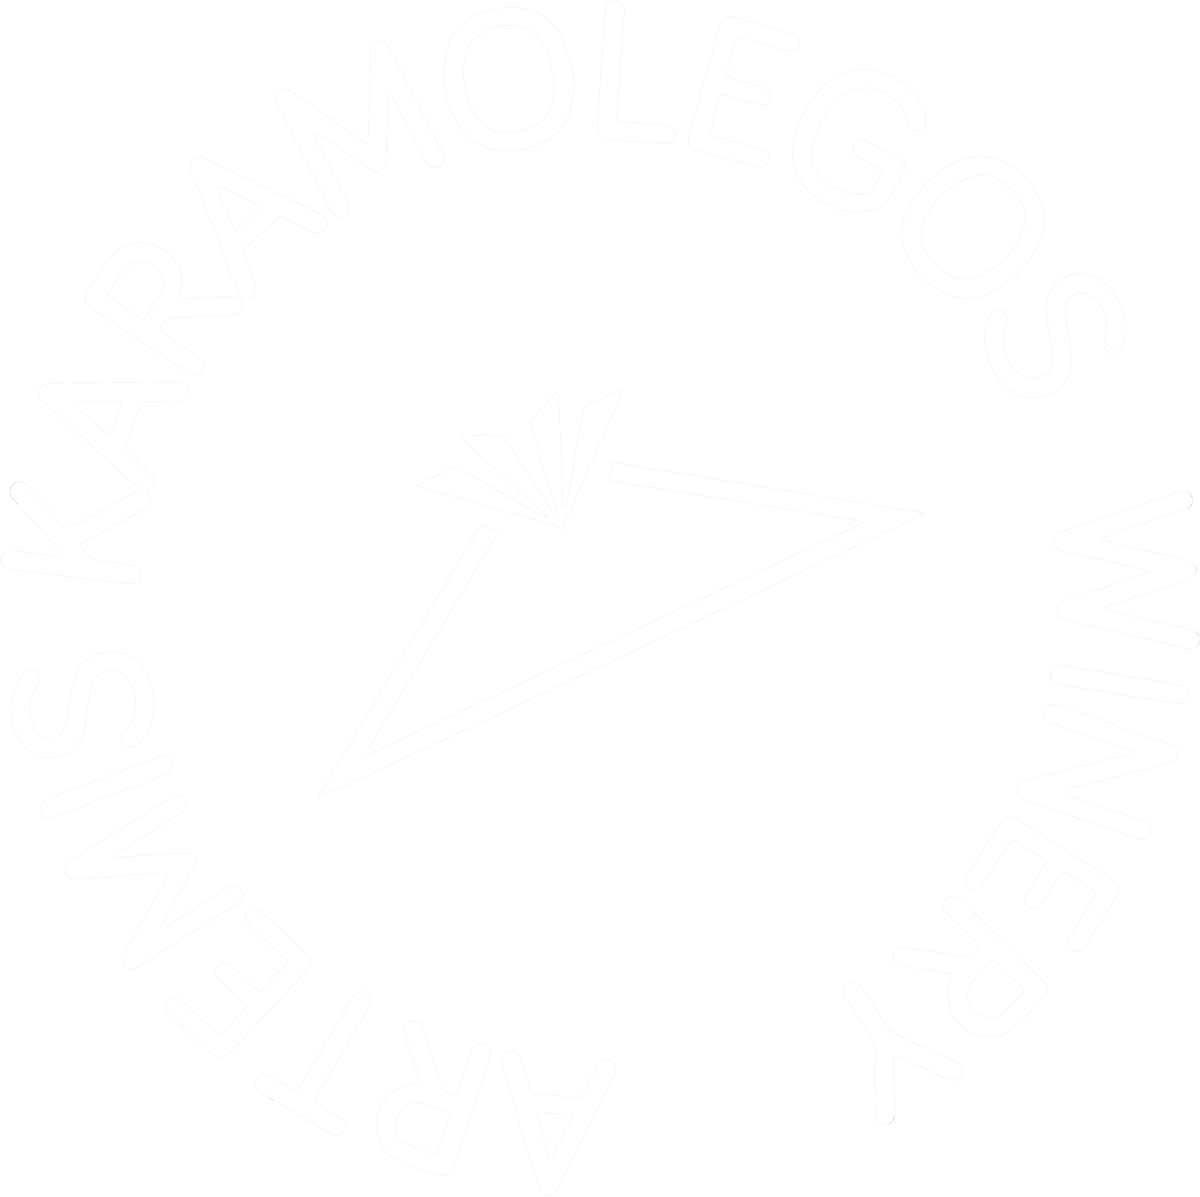 Artemis Karamolegos Santorini Winery | The winery Artemis Karamolegos among the most dynamic and rapidly evolving wineries of Santorini